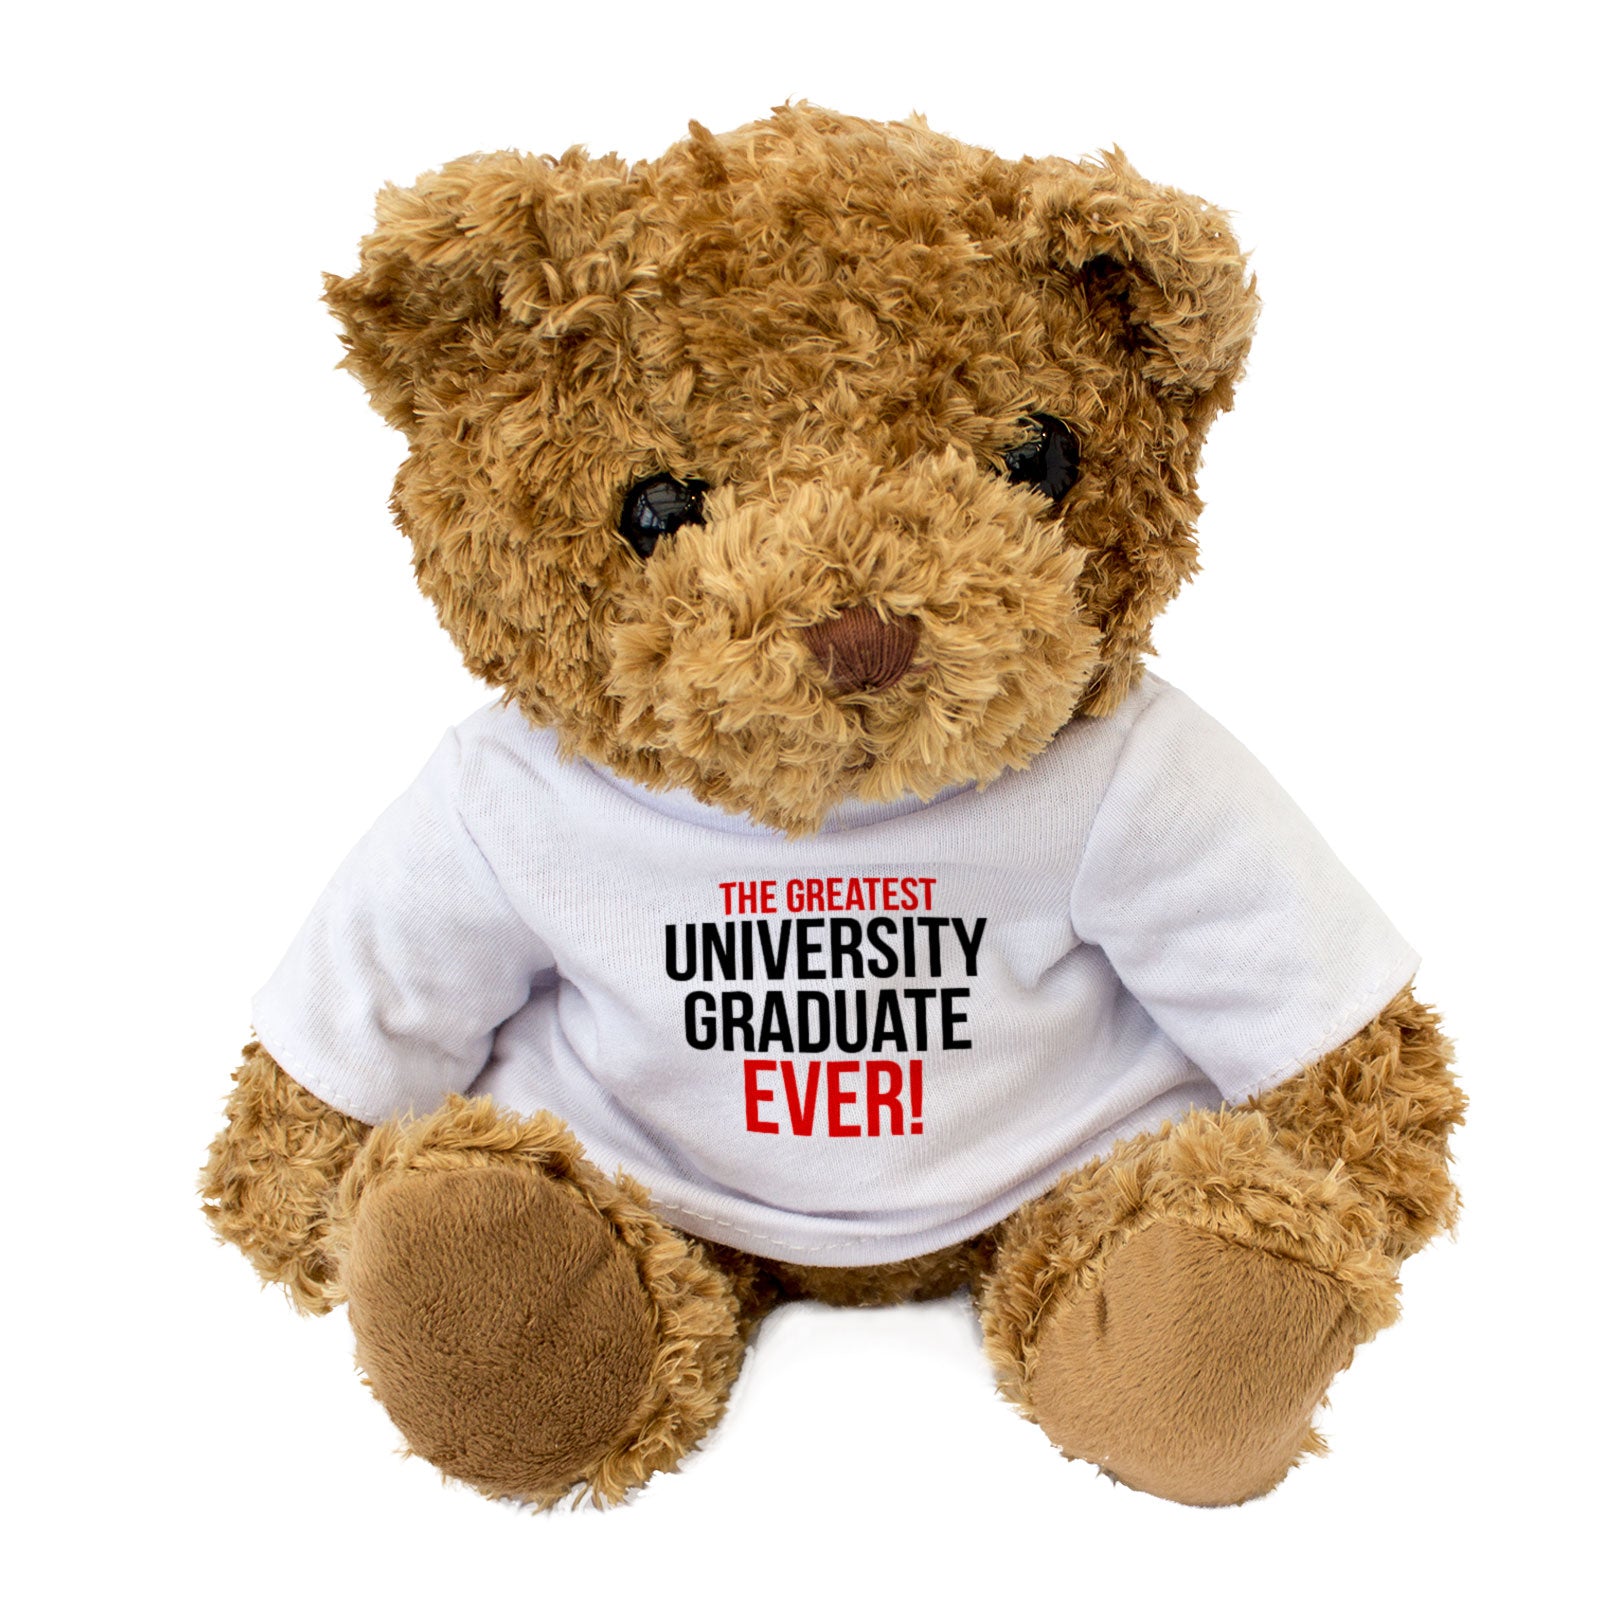 The Greatest University Graduate Ever - Teddy Bear